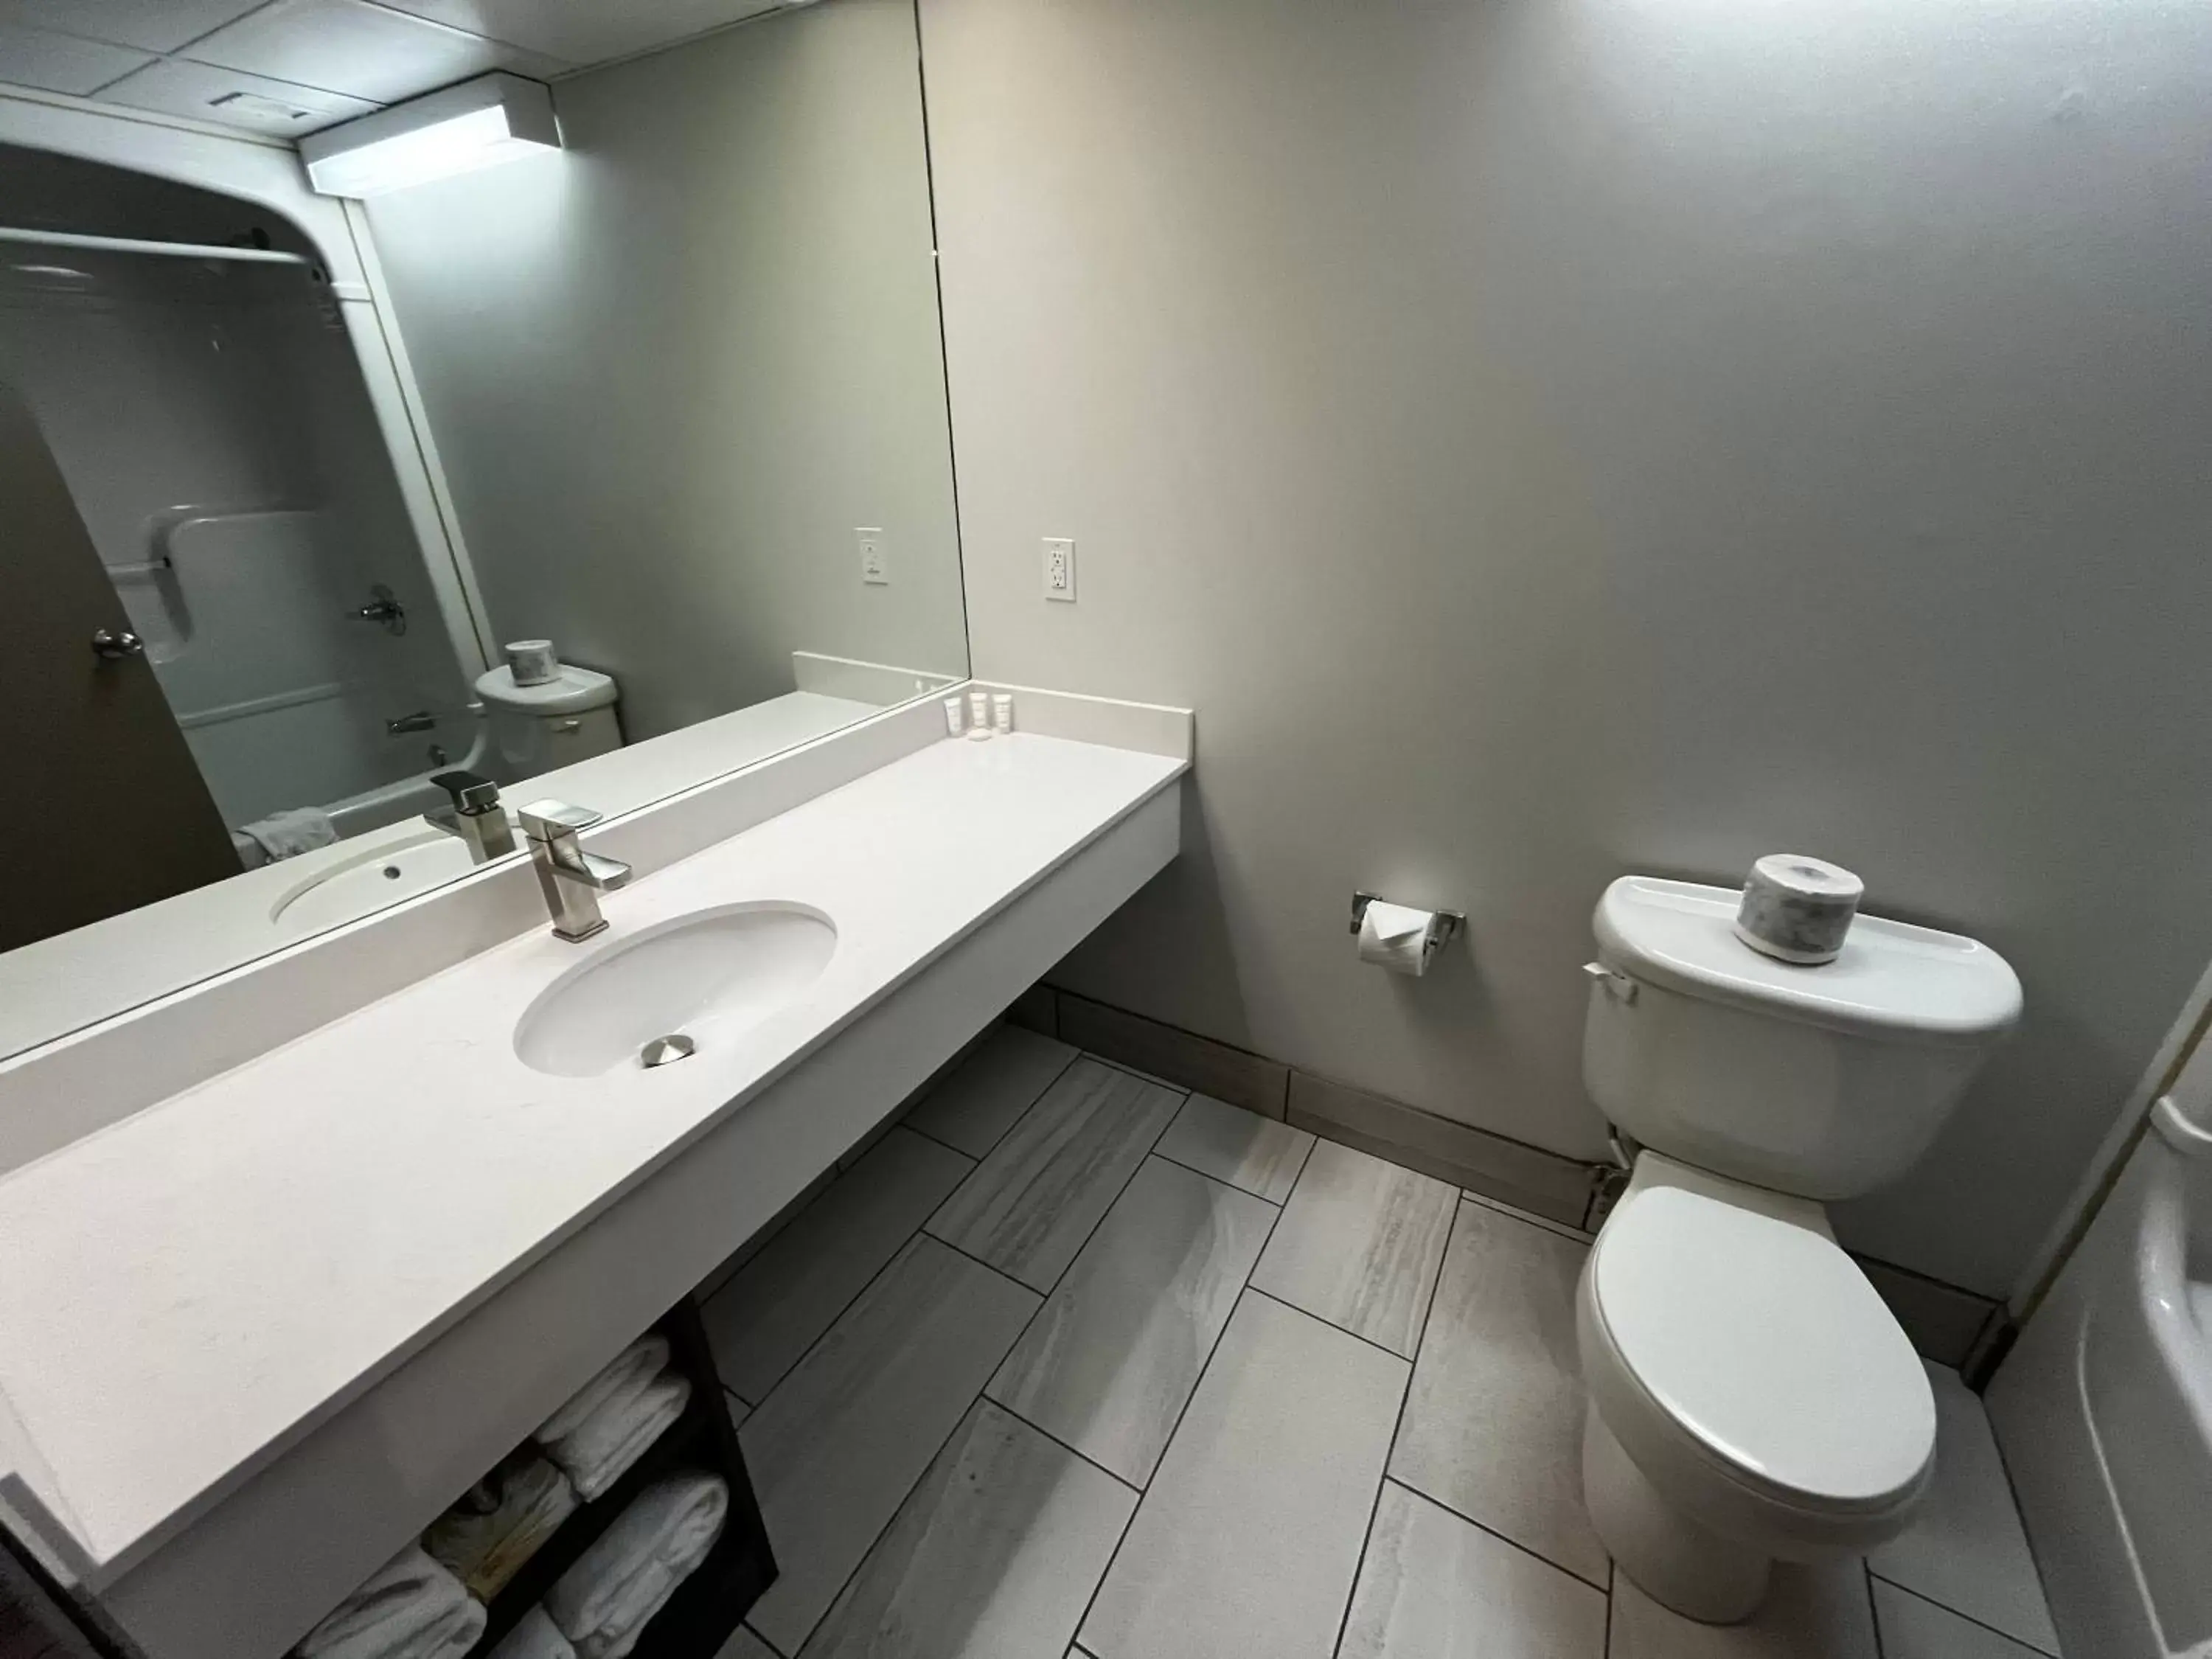 Bathroom in Canad Inns Destination Centre Brandon